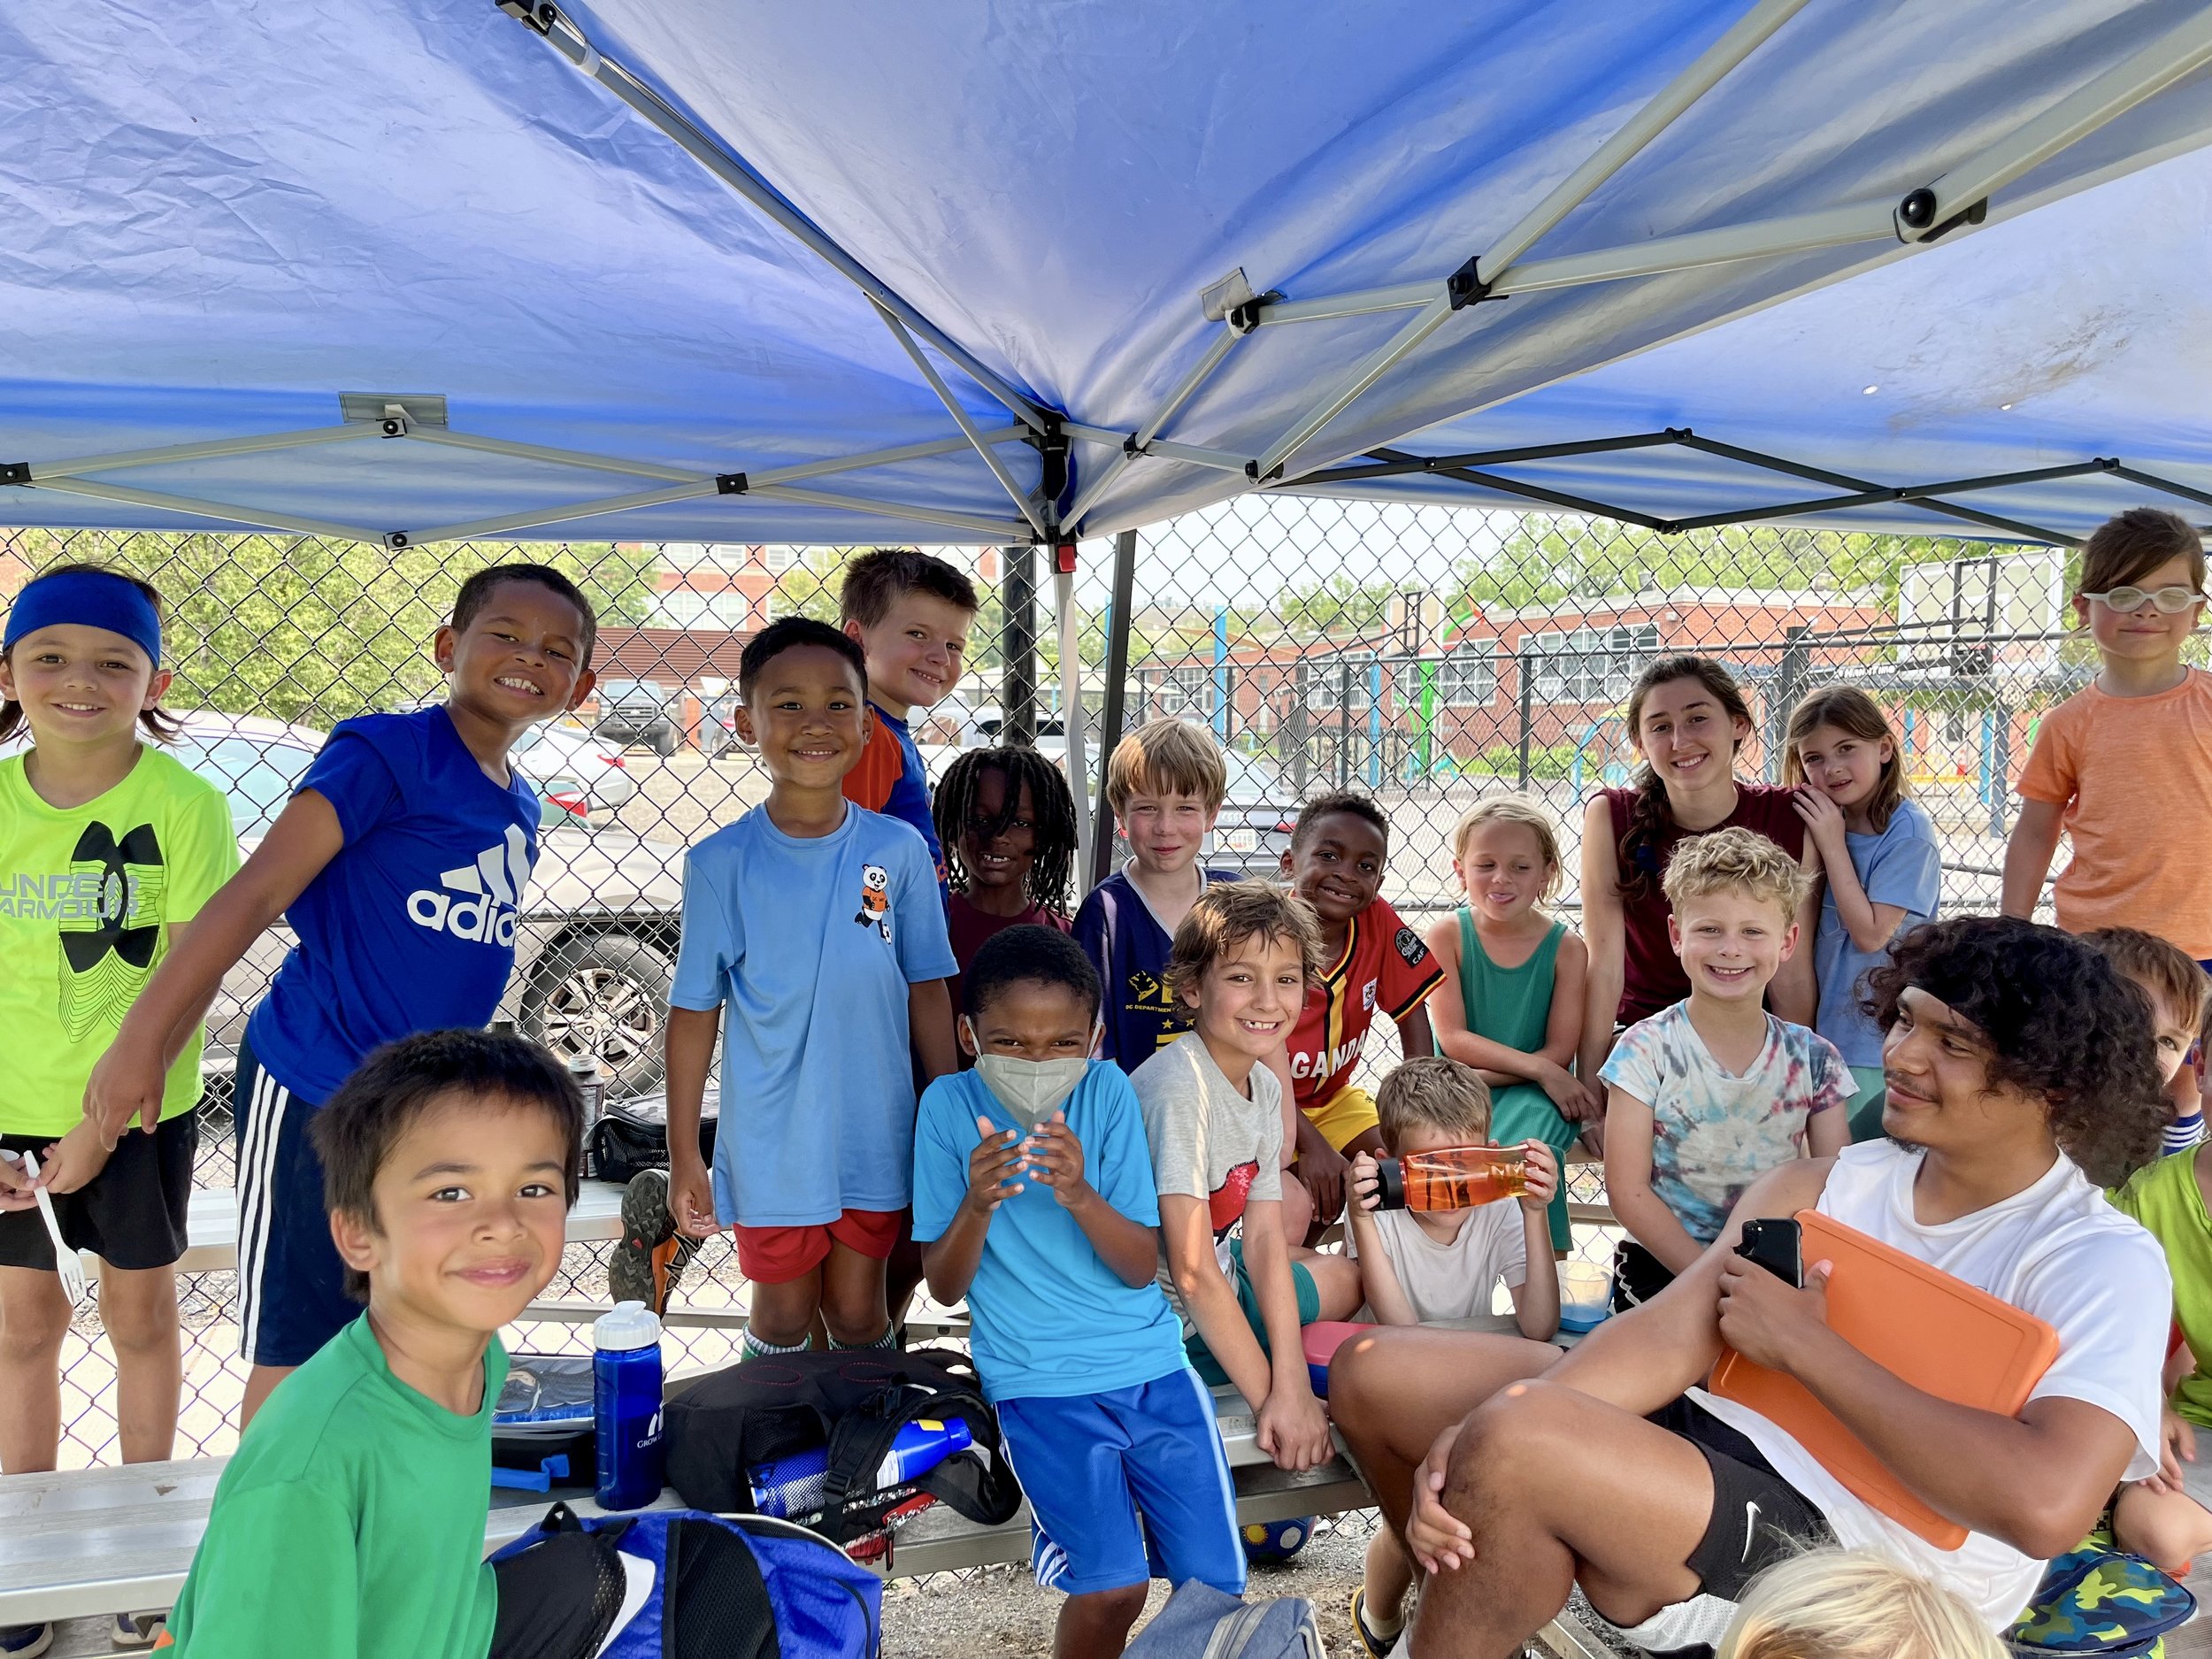 Dc-way-soccer-club-for-kids-in-washington-dc-summer-camp-at-tyler-elementary-school- 000379.jpeg